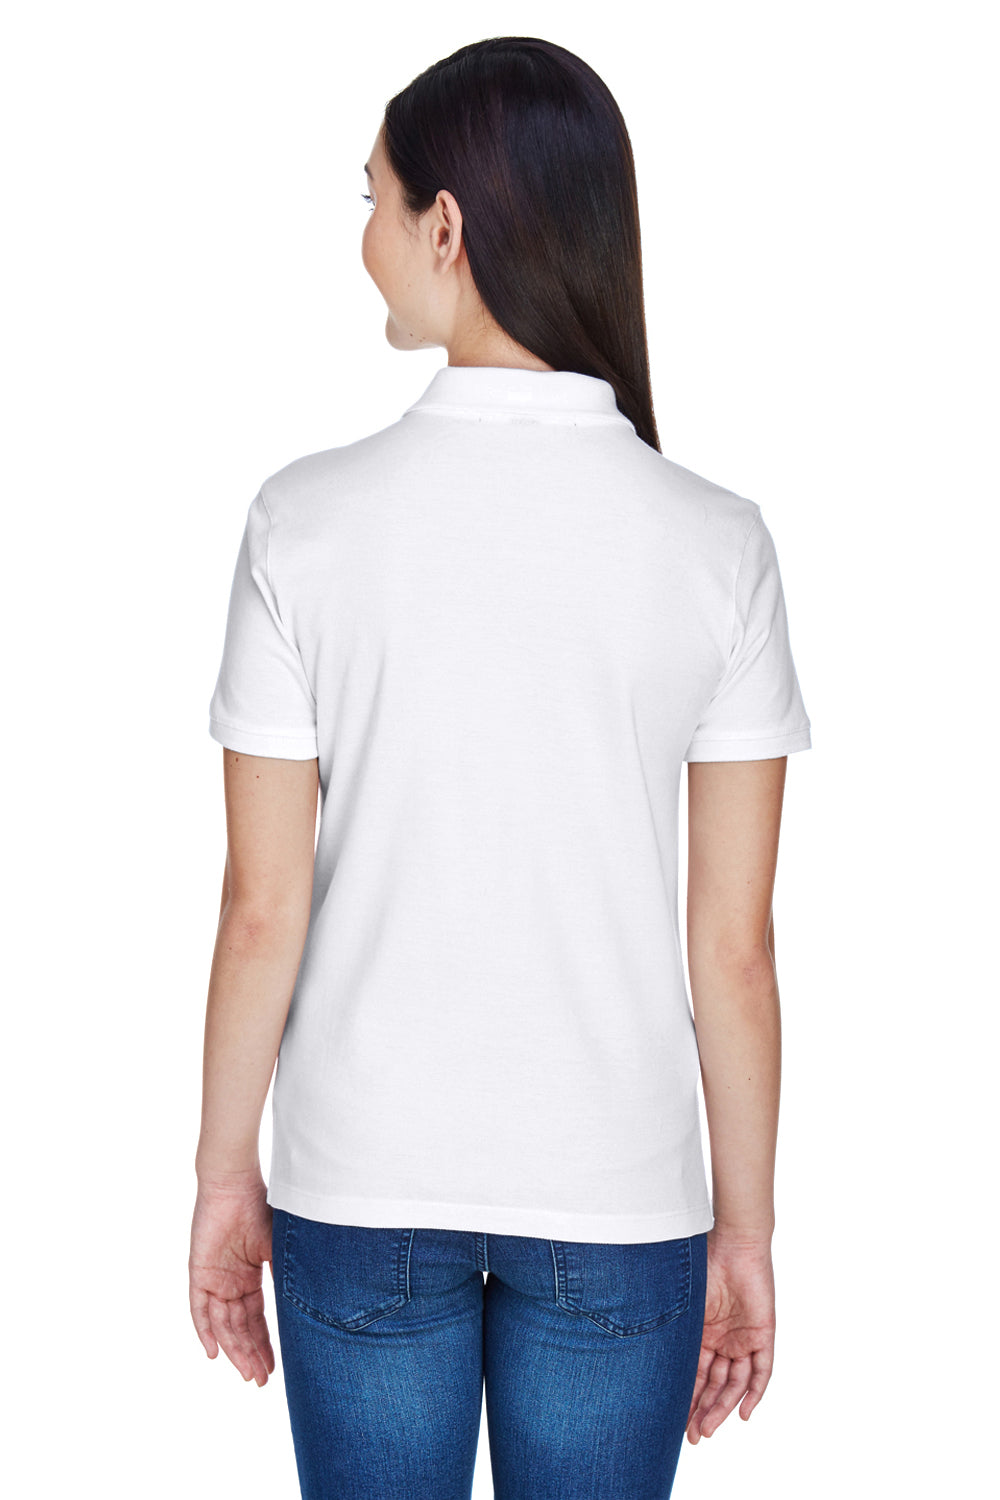 Harriton M200W Womens Short Sleeve Polo Shirt White Back